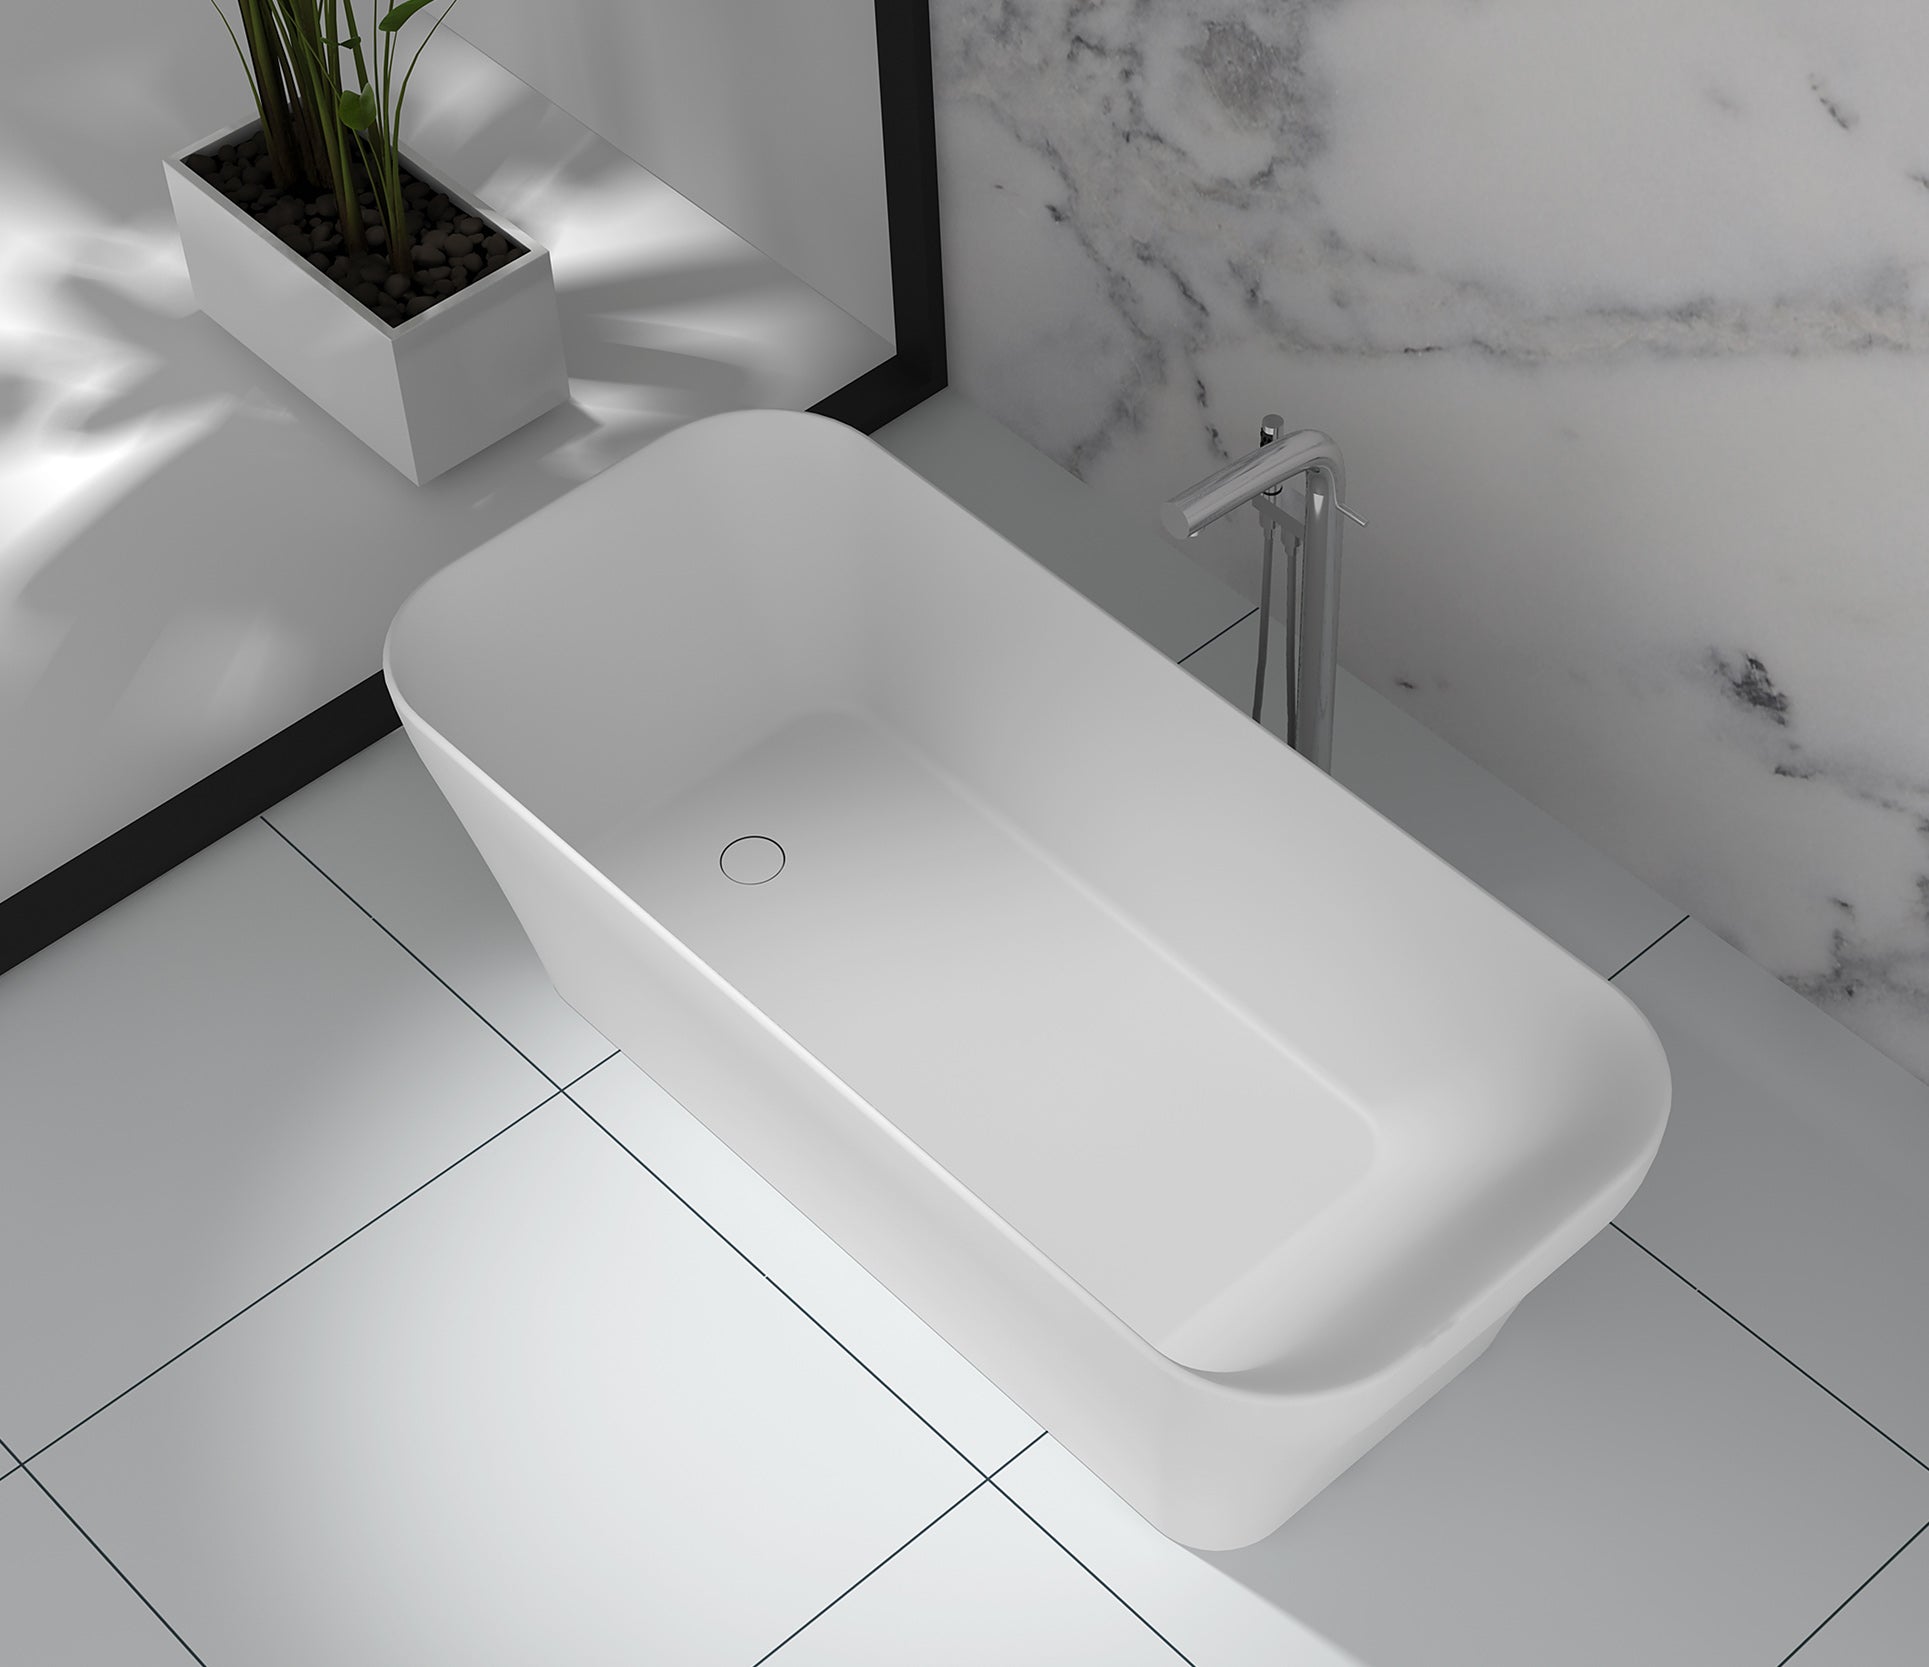 Studio Bagno Verve Freestanding Bath 1700mm